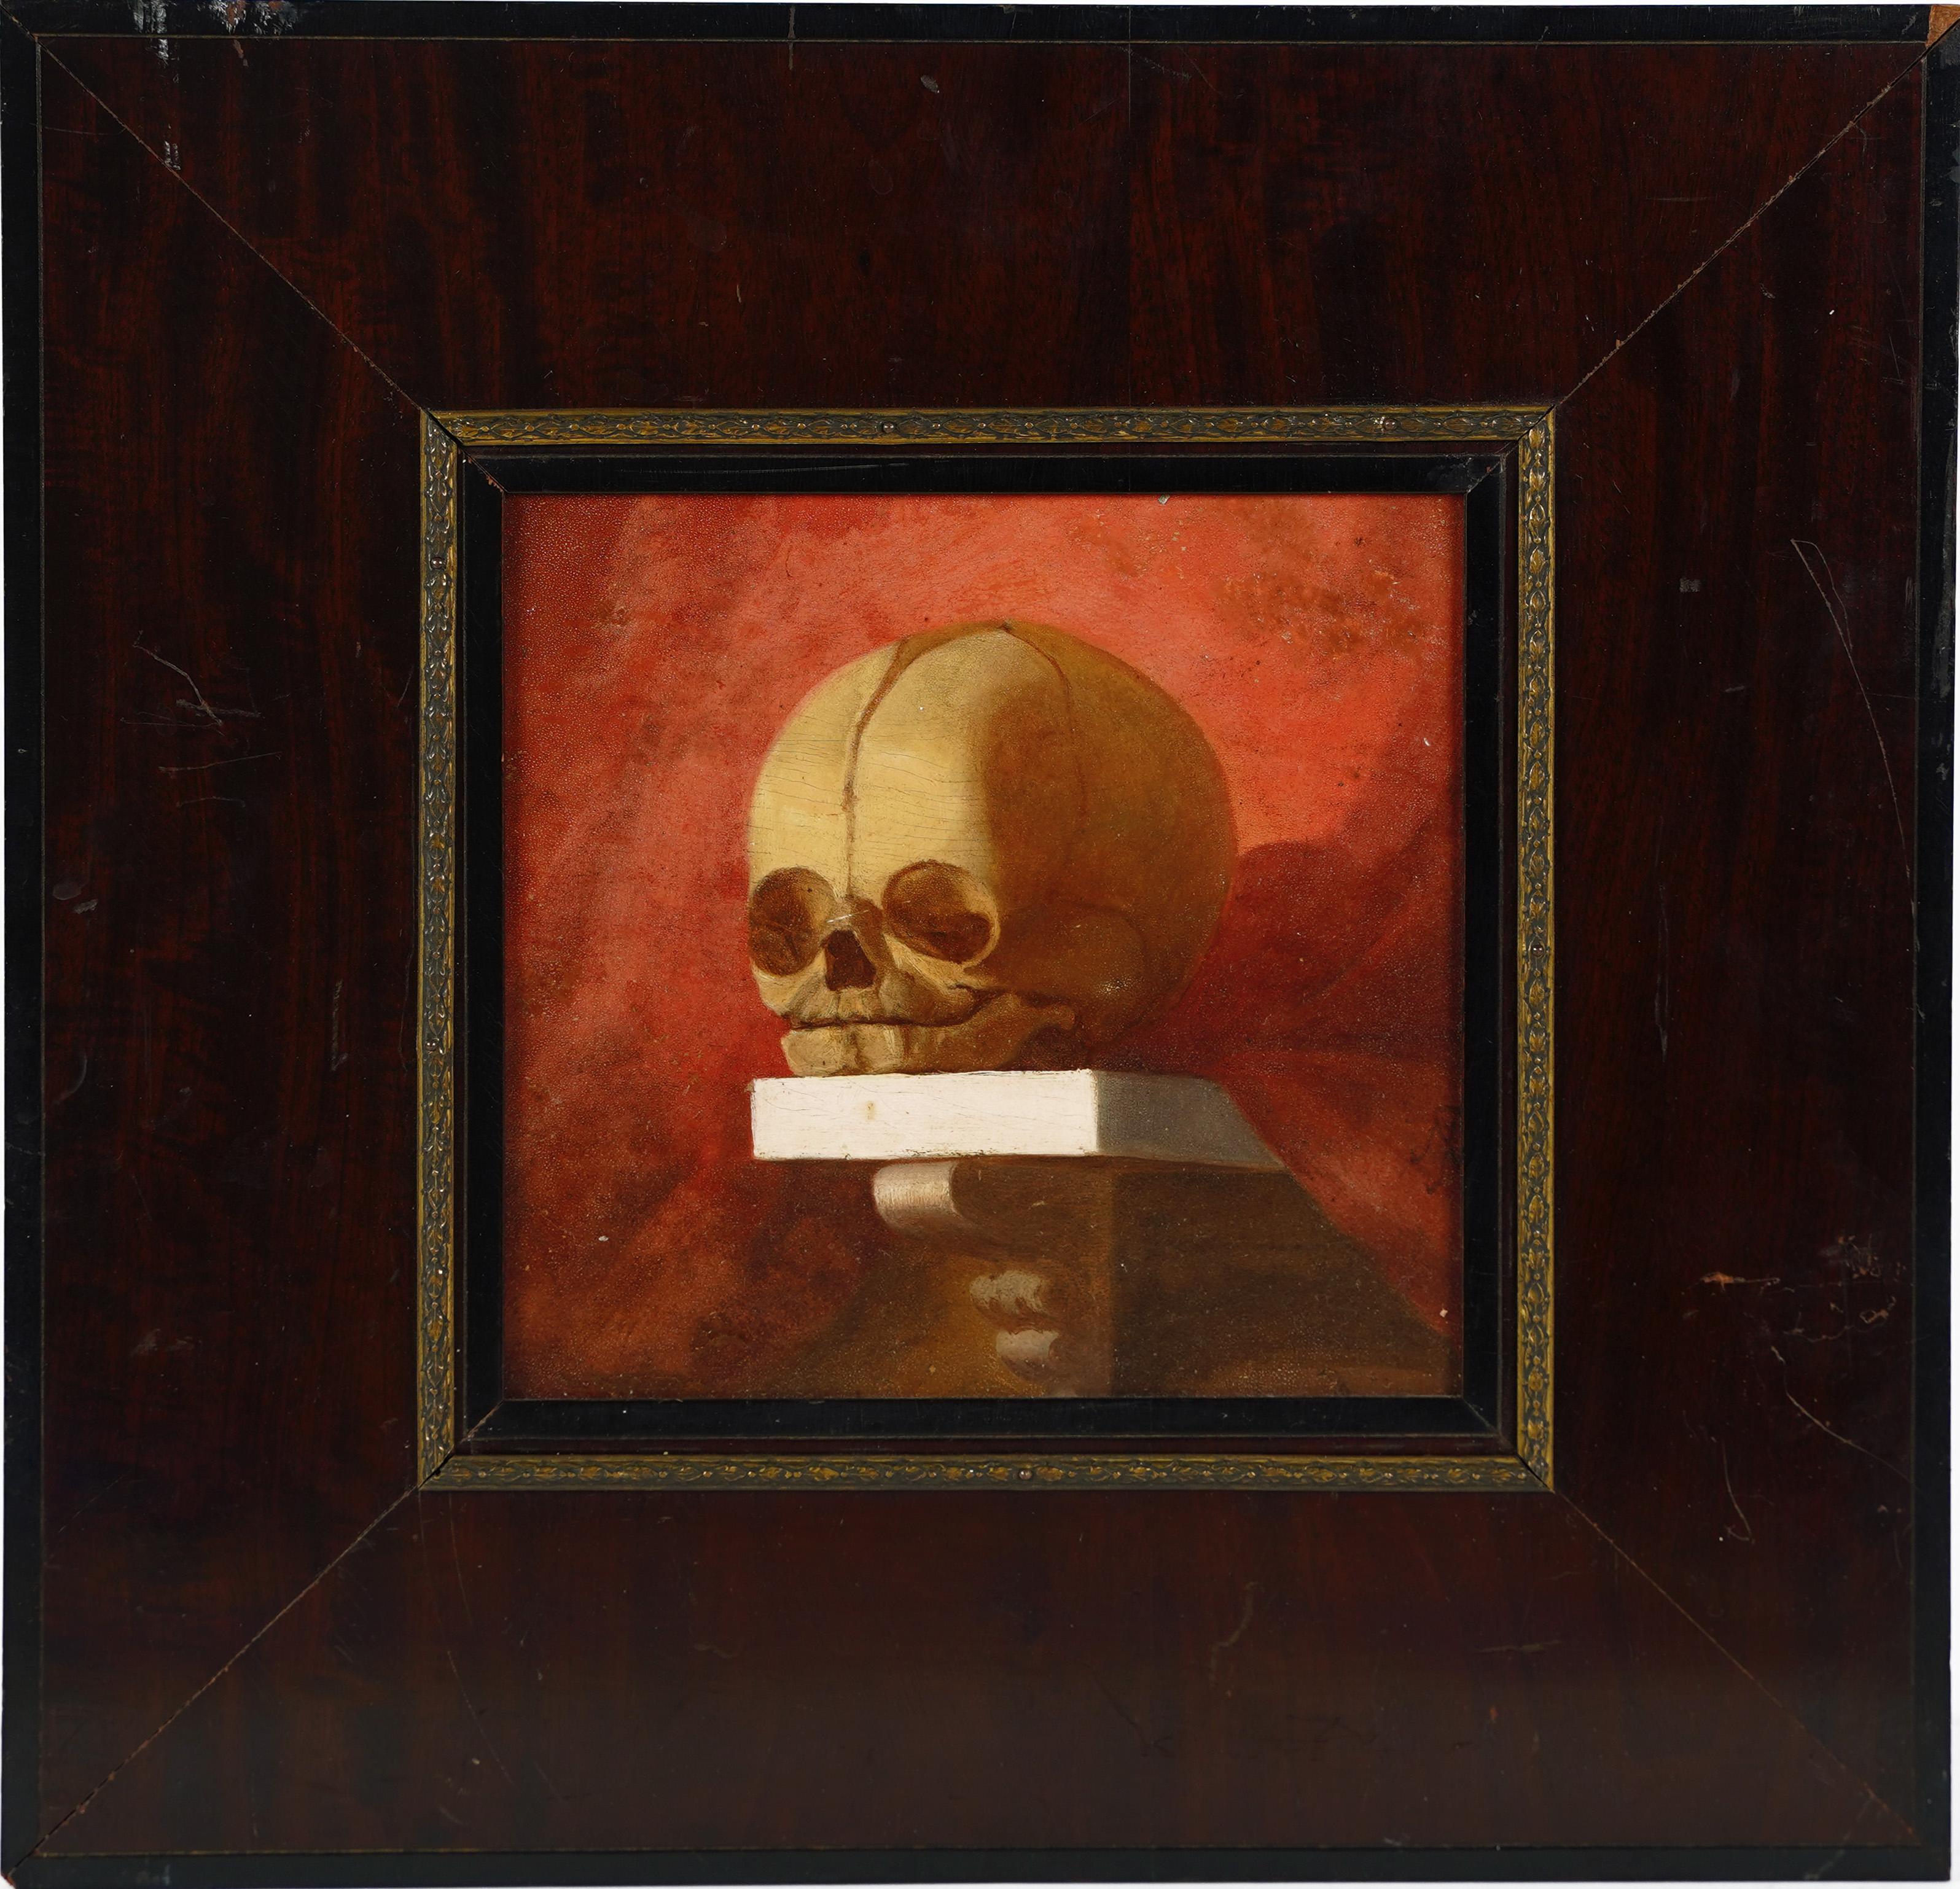  Antique American School 19th Century Memento Mori Human Skull Still Life Oil - Painting by Unknown